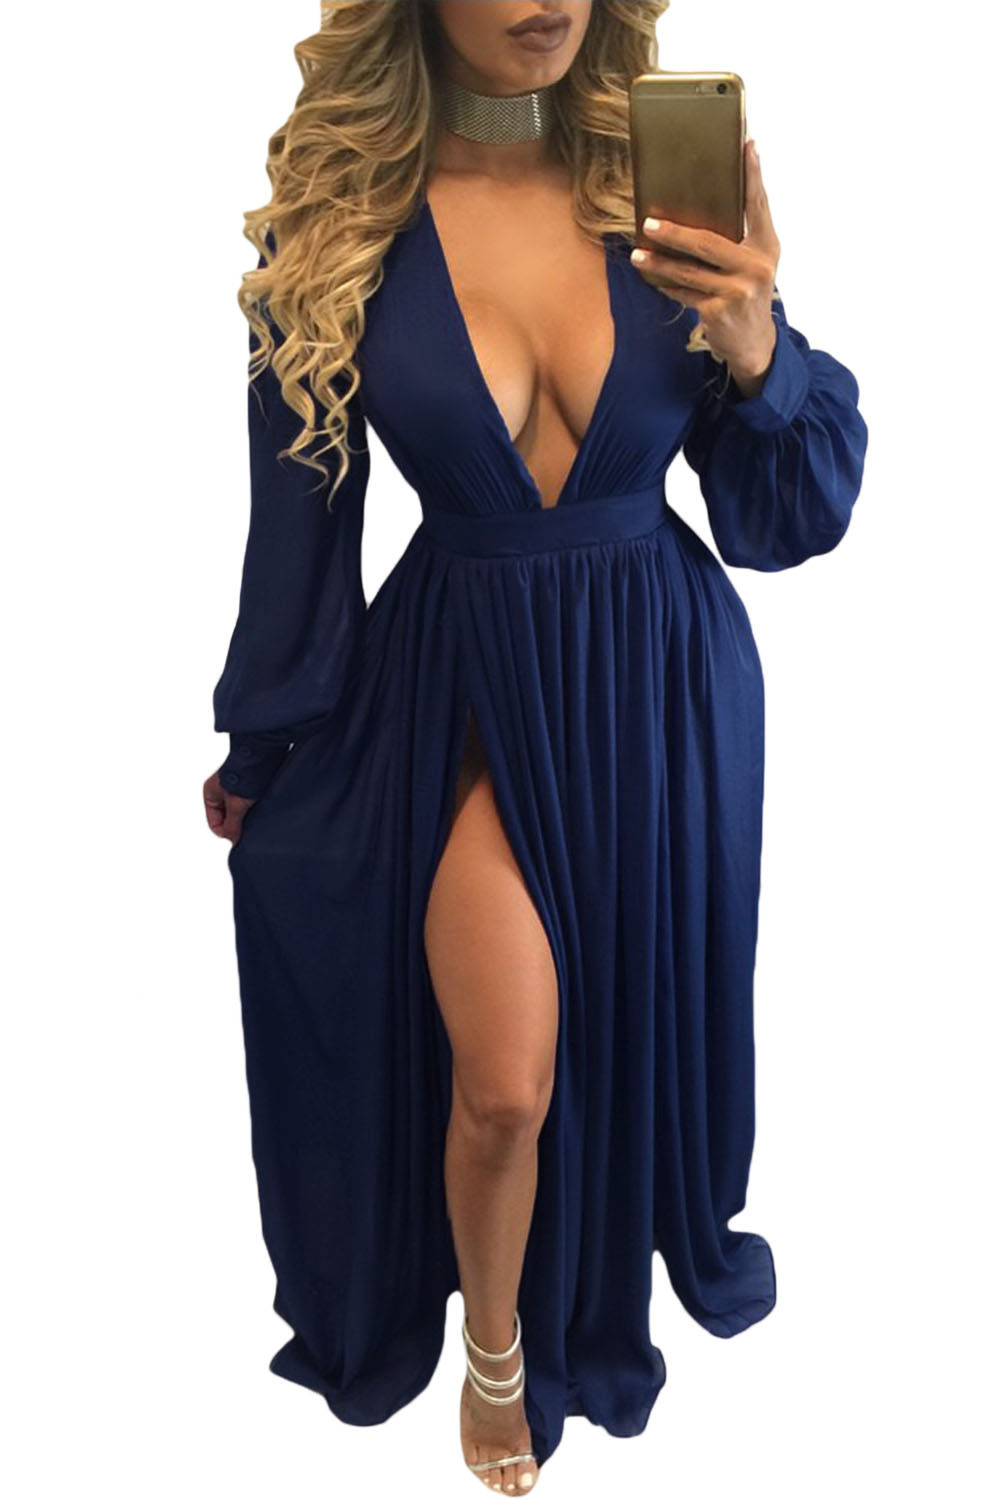 Blue Goddess Dress & Always In Style 2017-2018